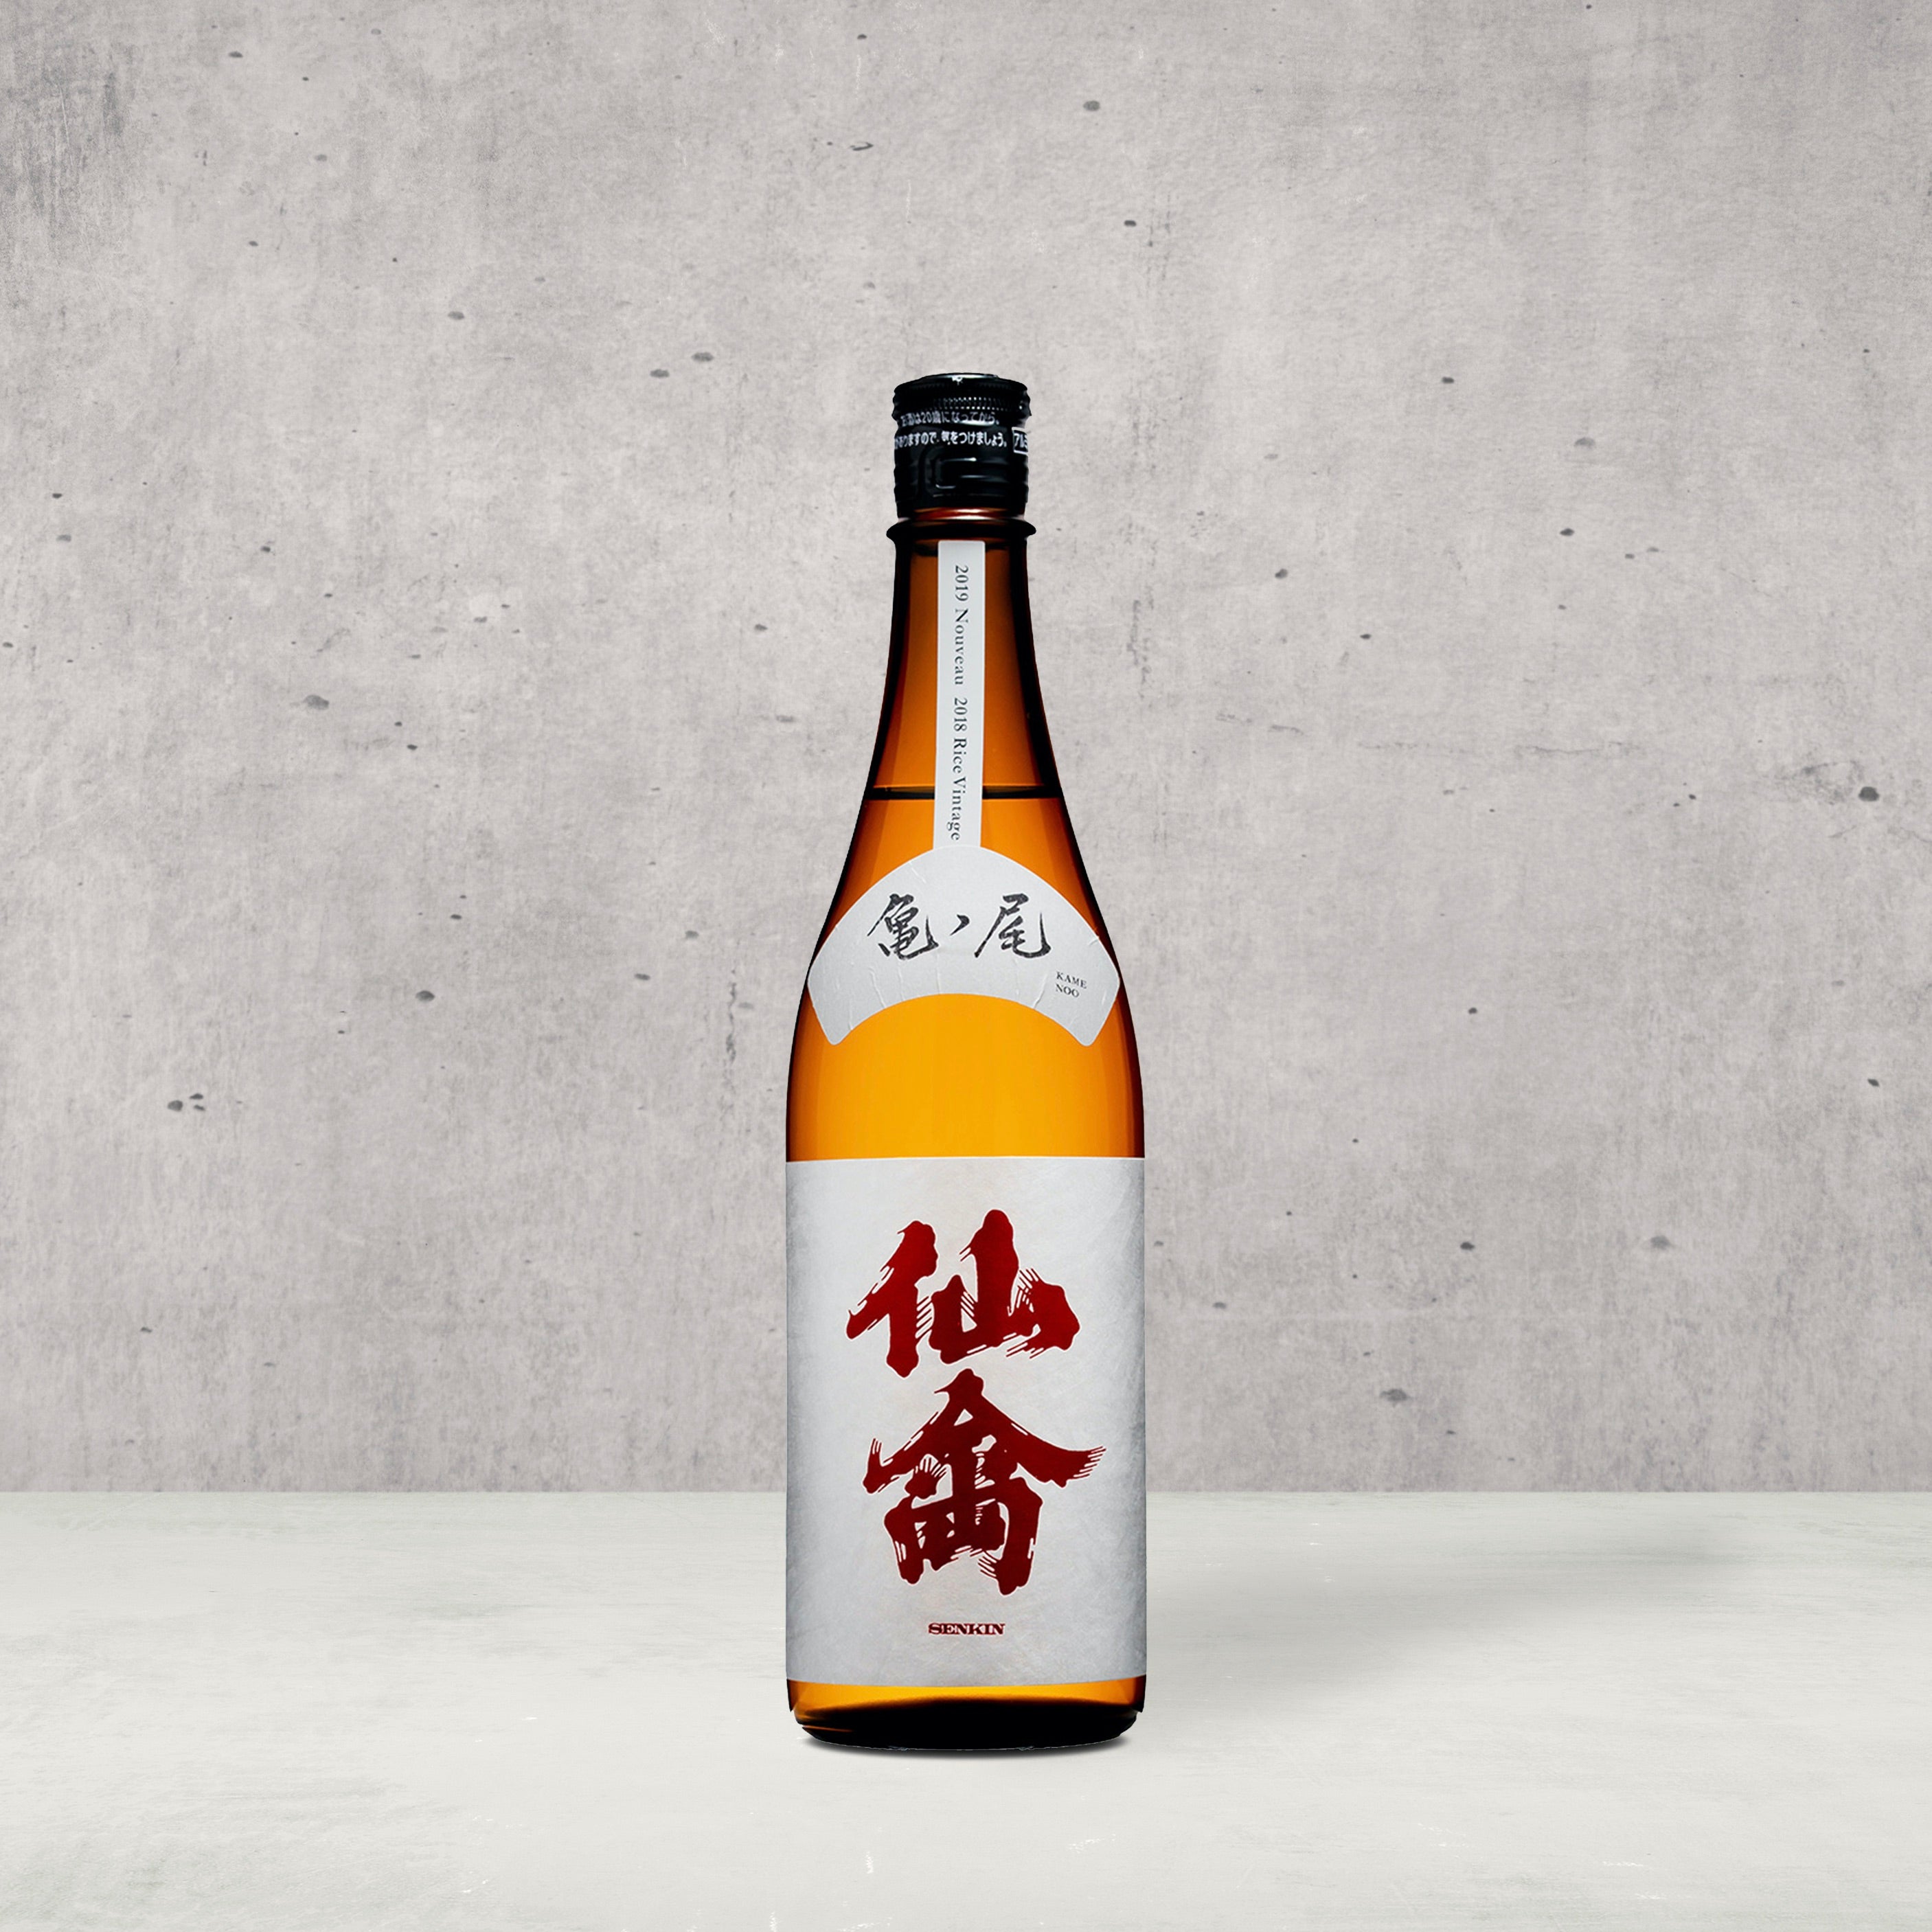 Senkin "Classic" Kamenoo Sake. Delicious Junmai Daiginjo Sake. Senkin Brewery.